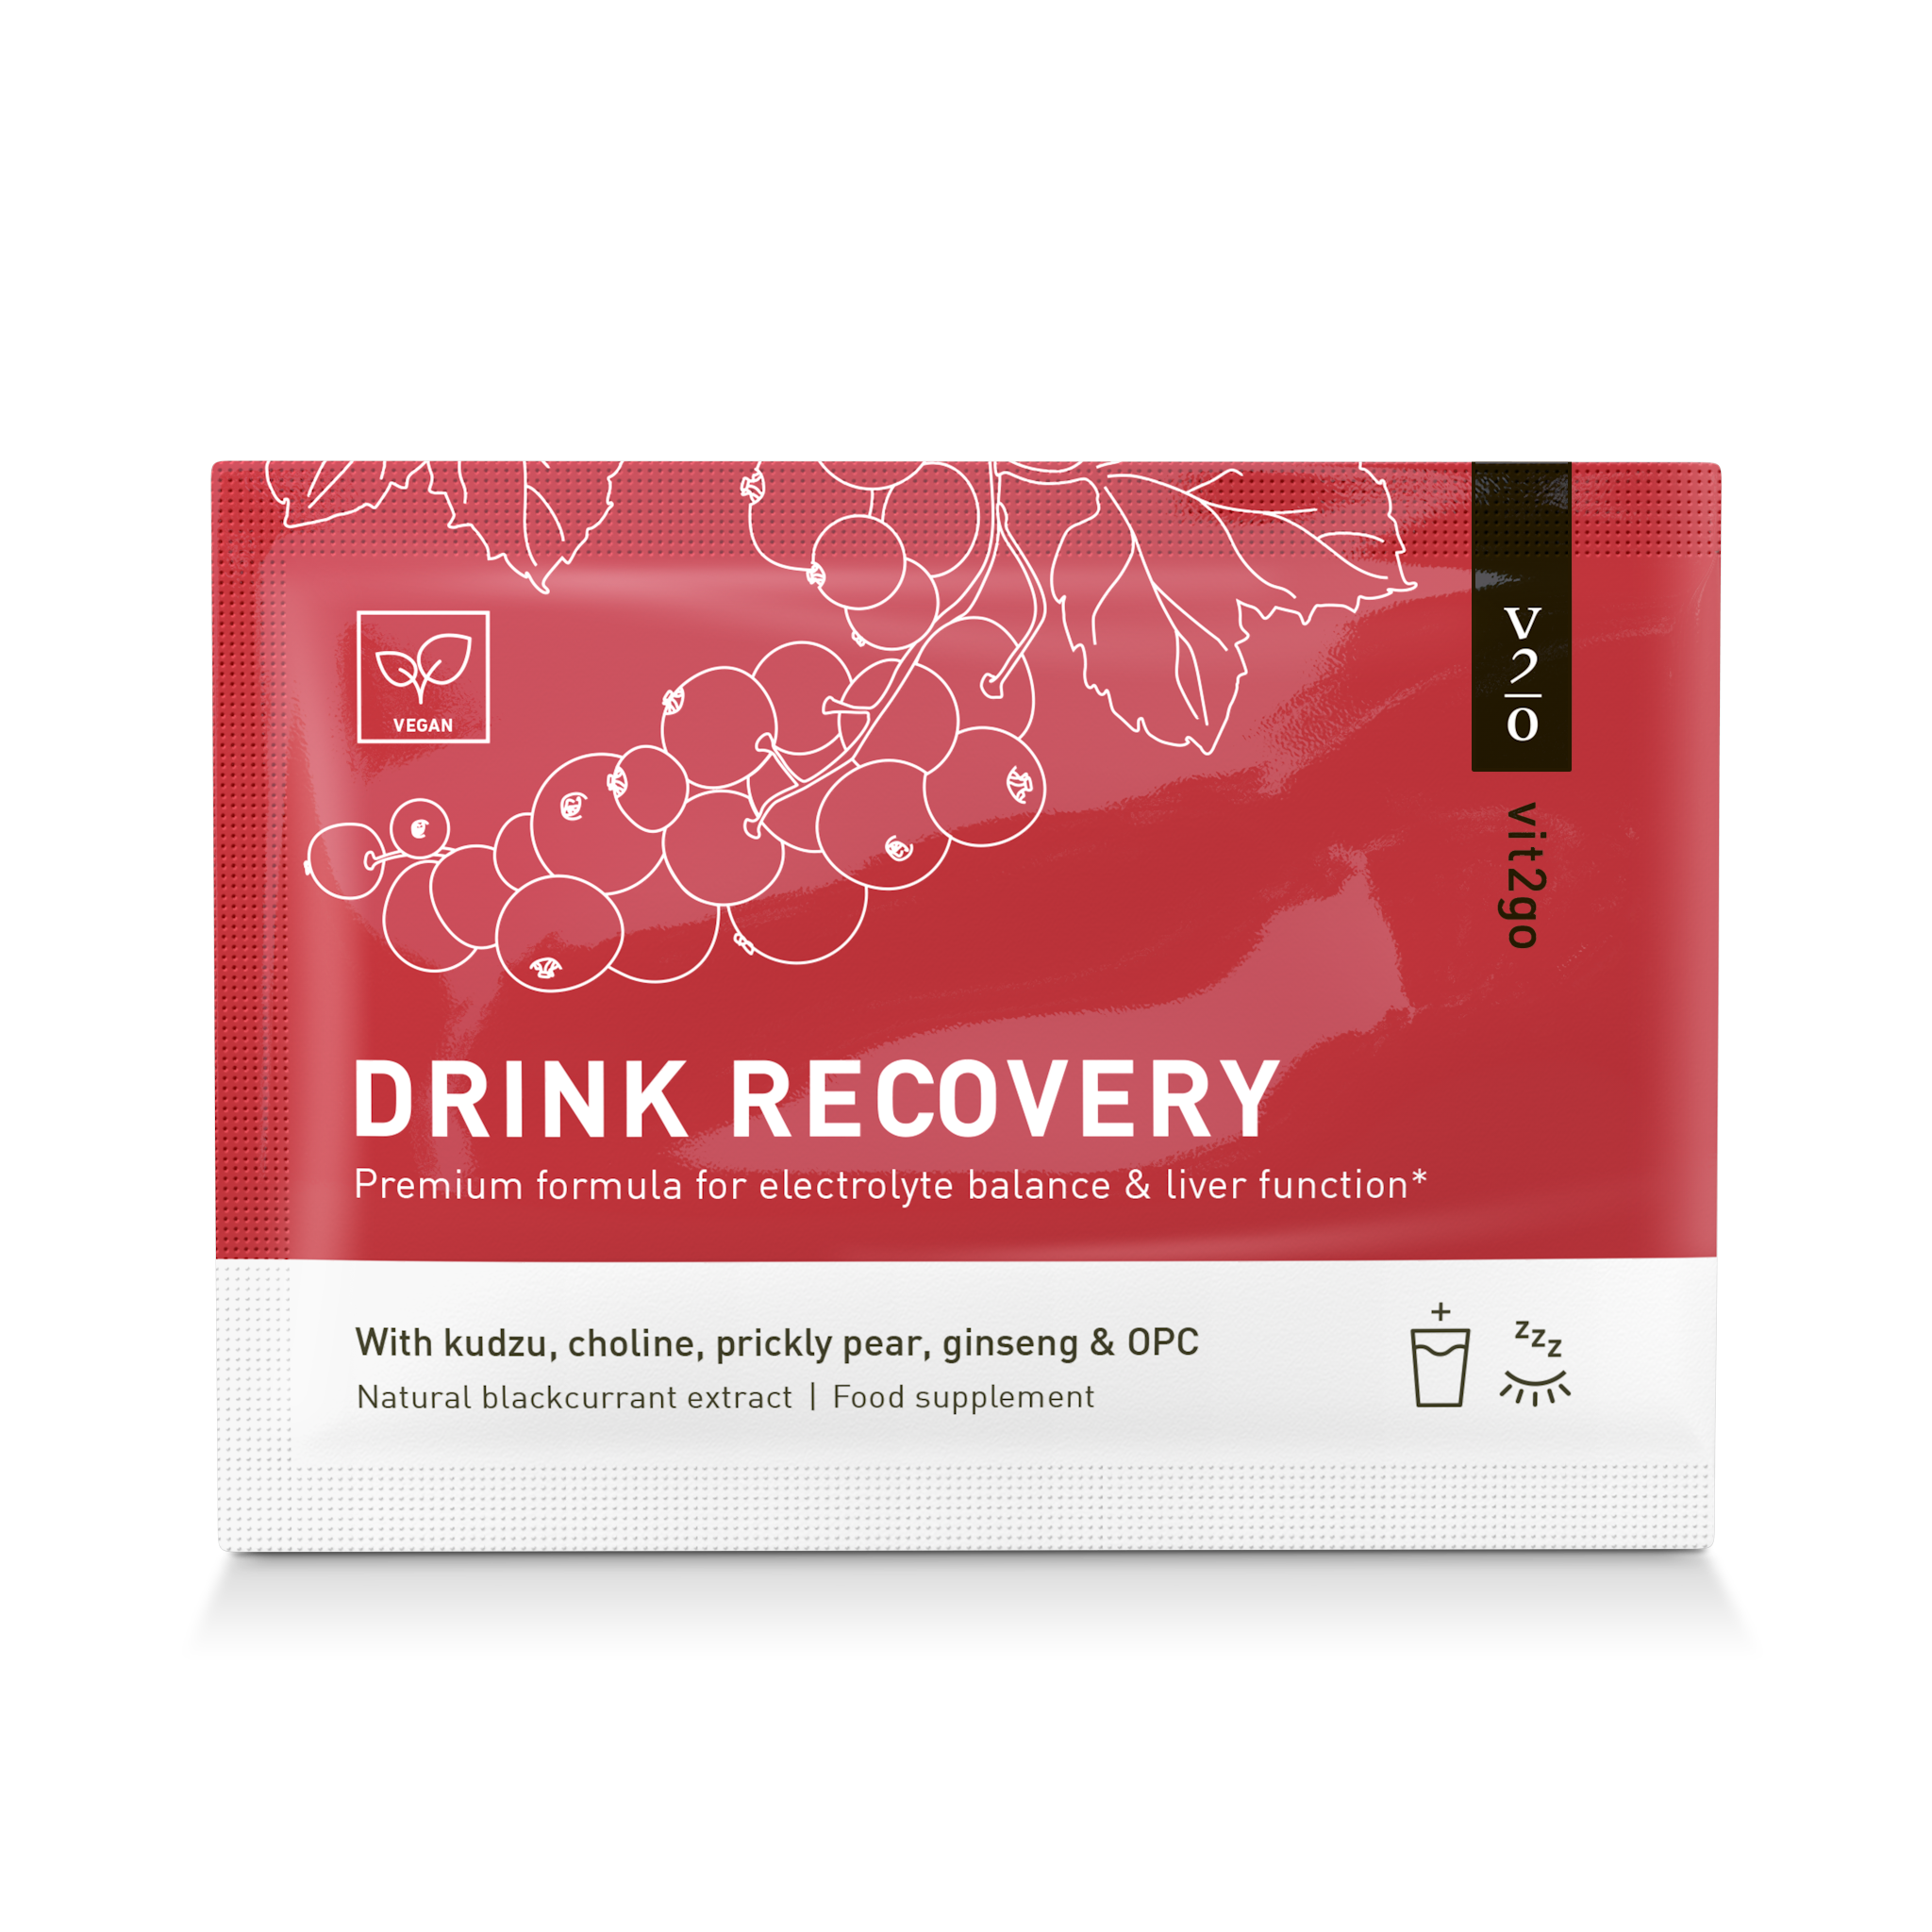 DRINK RECOVERY – Einzelne portion